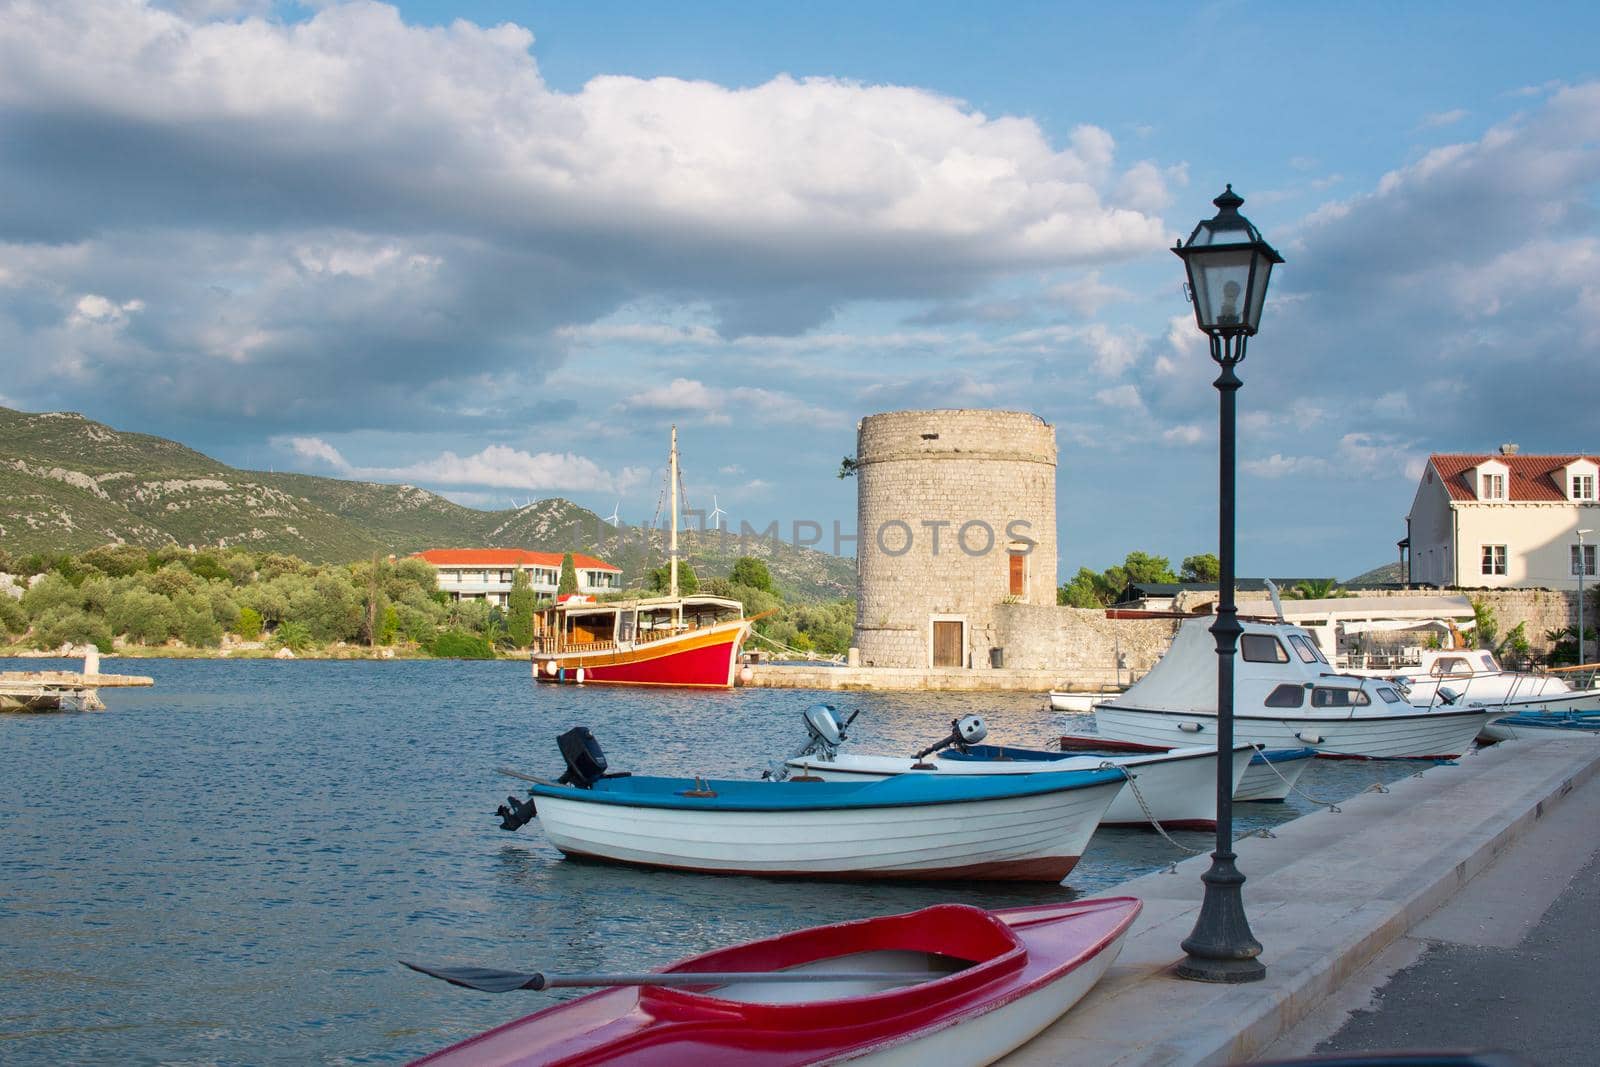 Small fishing boats in Mediterranean Adriatic sea bay tied to town quay in Croatia by VeraVerano